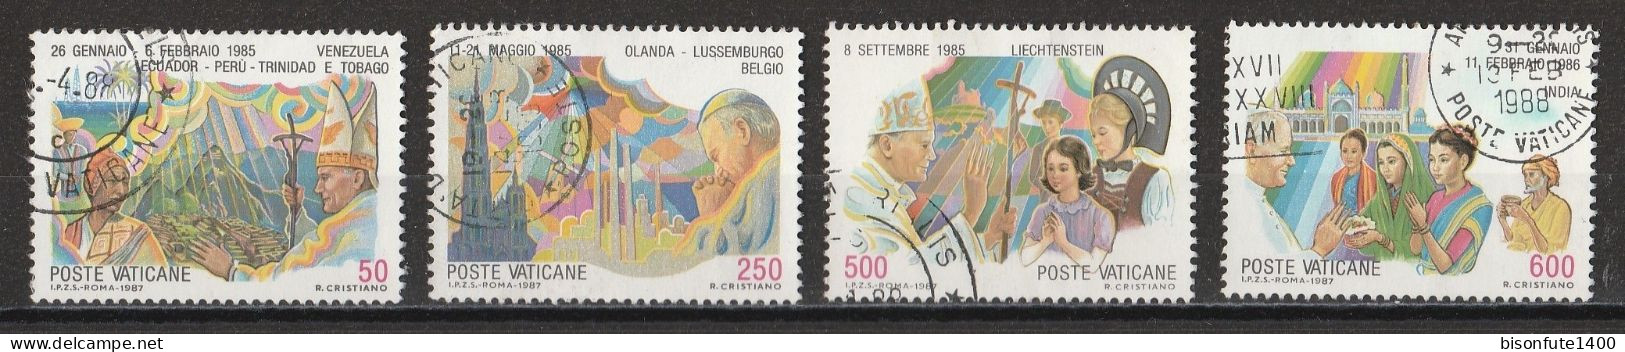 Vatican 1987 : Timbres Yvert & Tellier N° 817 - 818 - 820 - 821 - 822 - 823 Et 824 Oblitérés. - Gebraucht